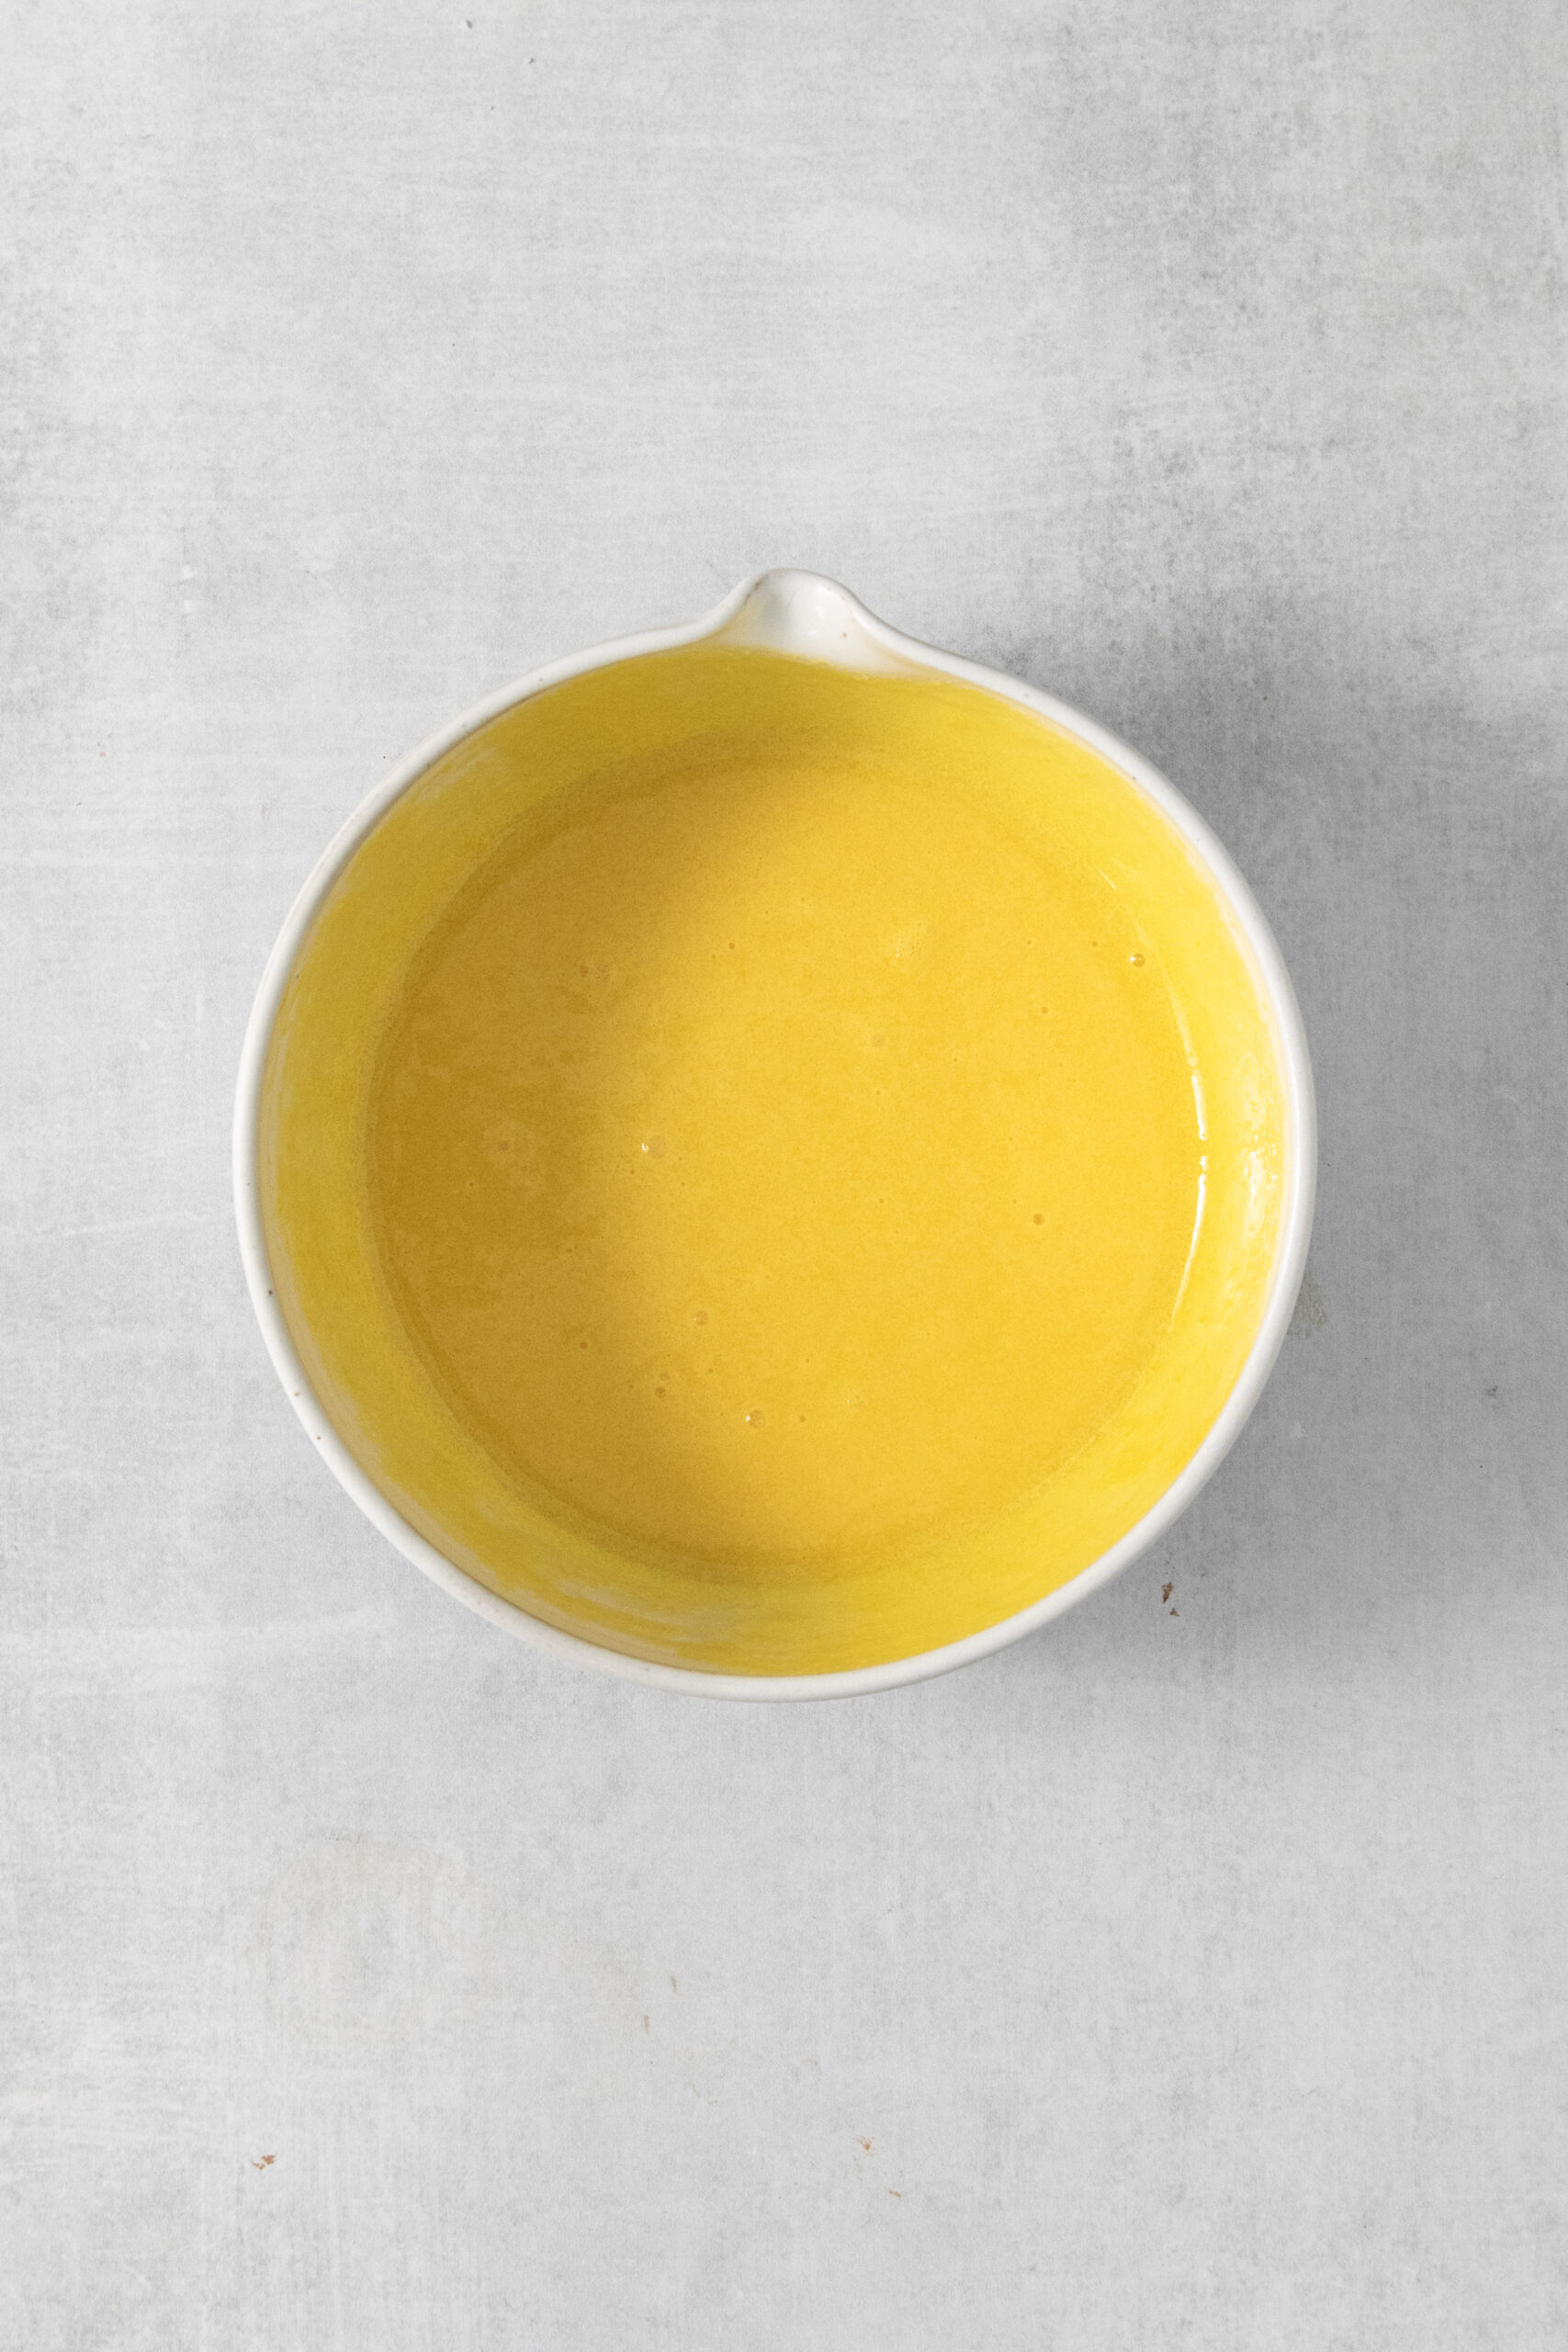 egg yolks and sugar mixed in a bowl